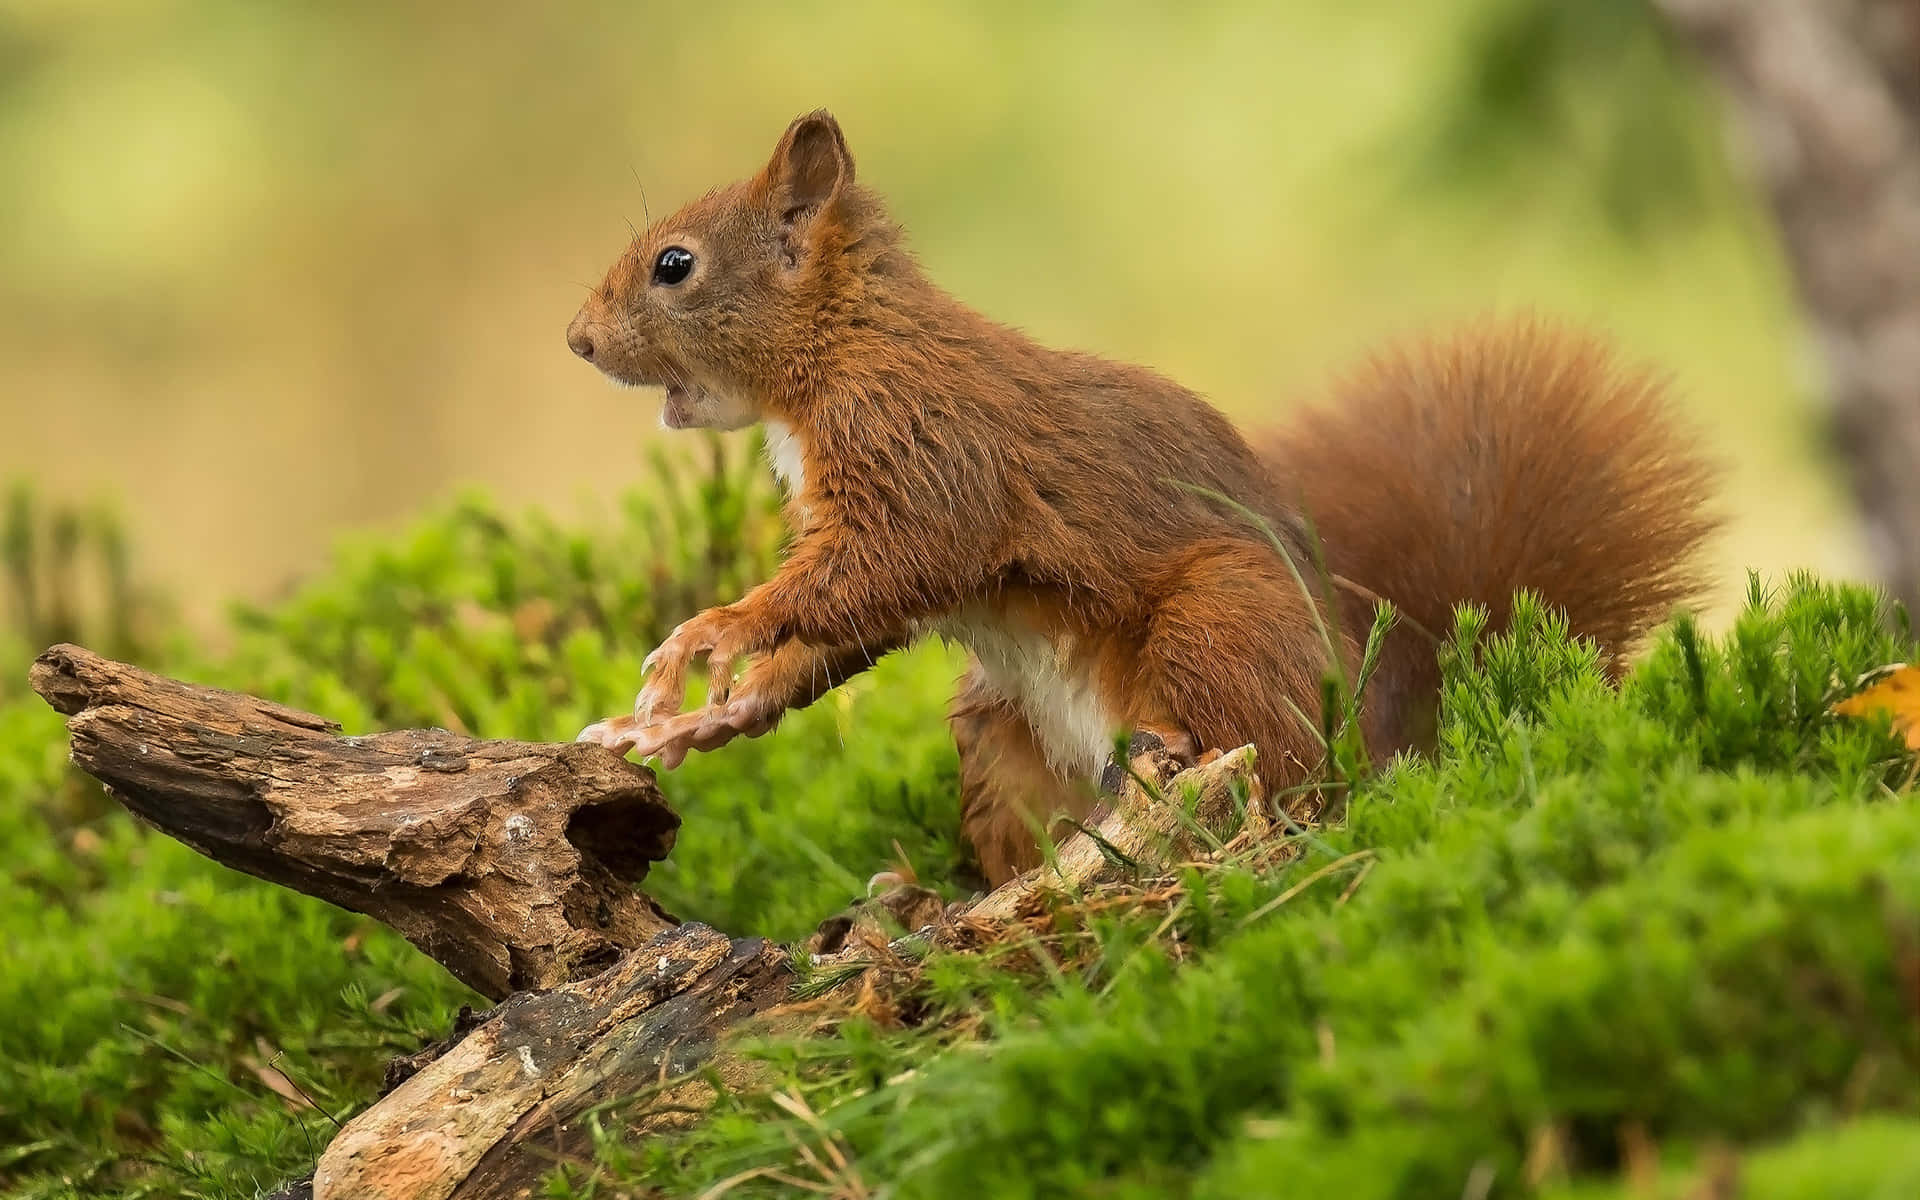 A squirrel enjoying its snack in a garden.